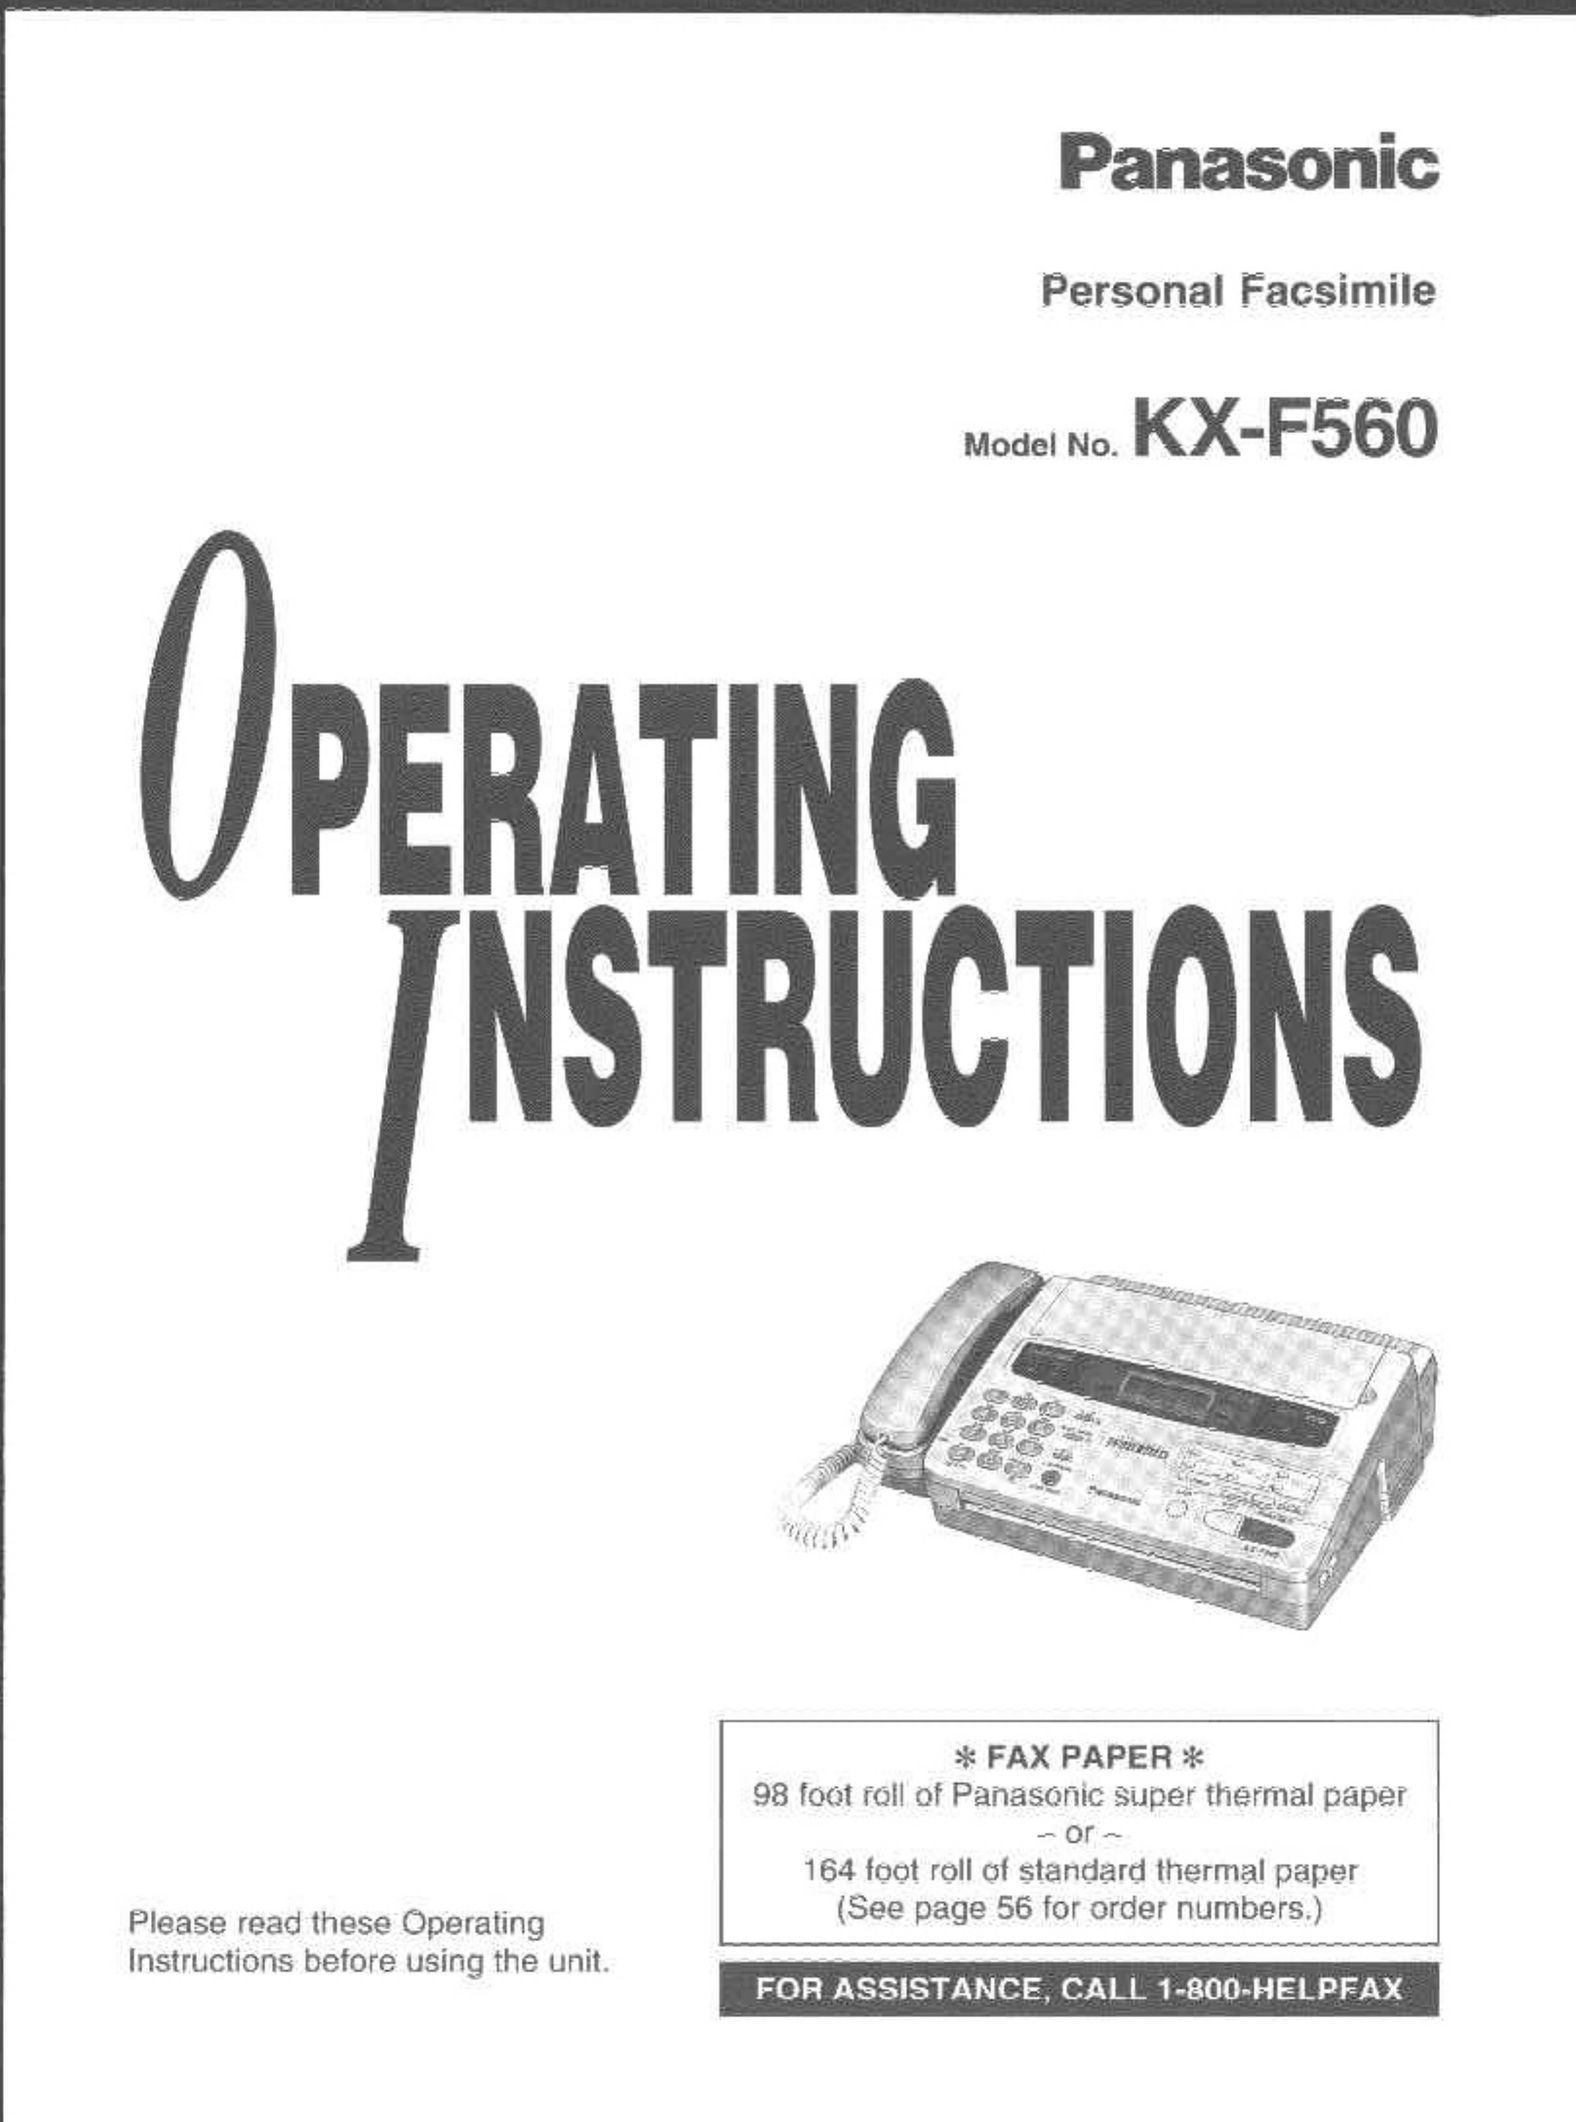 Panasonic KX-F560 Fax Machine User Manual